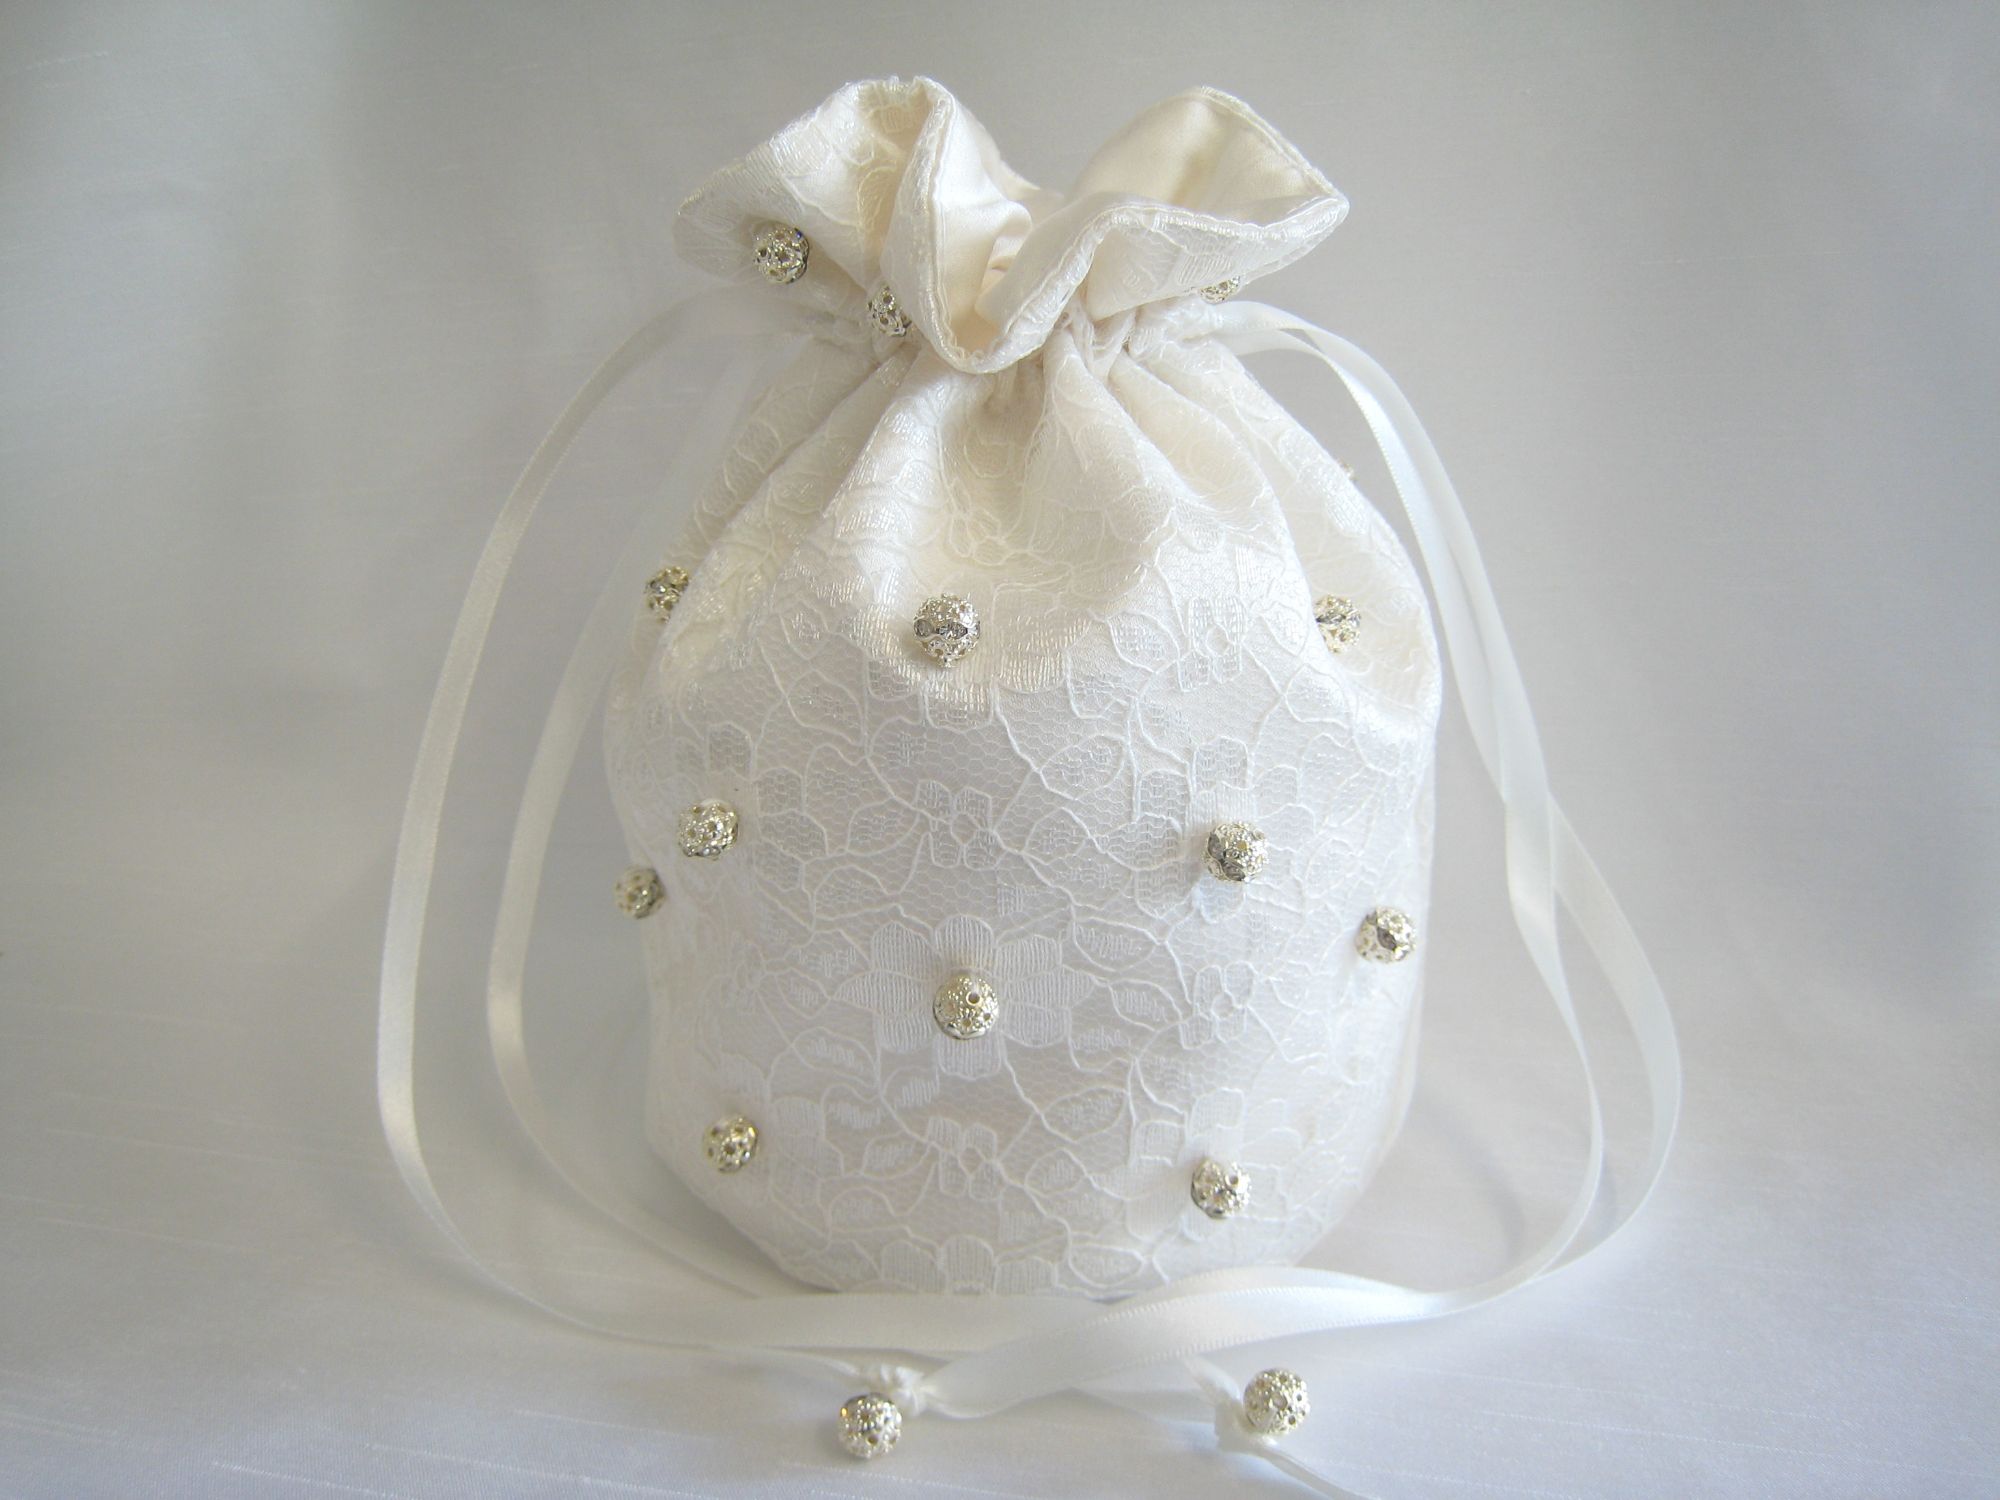 Wedding dolly bags for brides & bridesmaids.